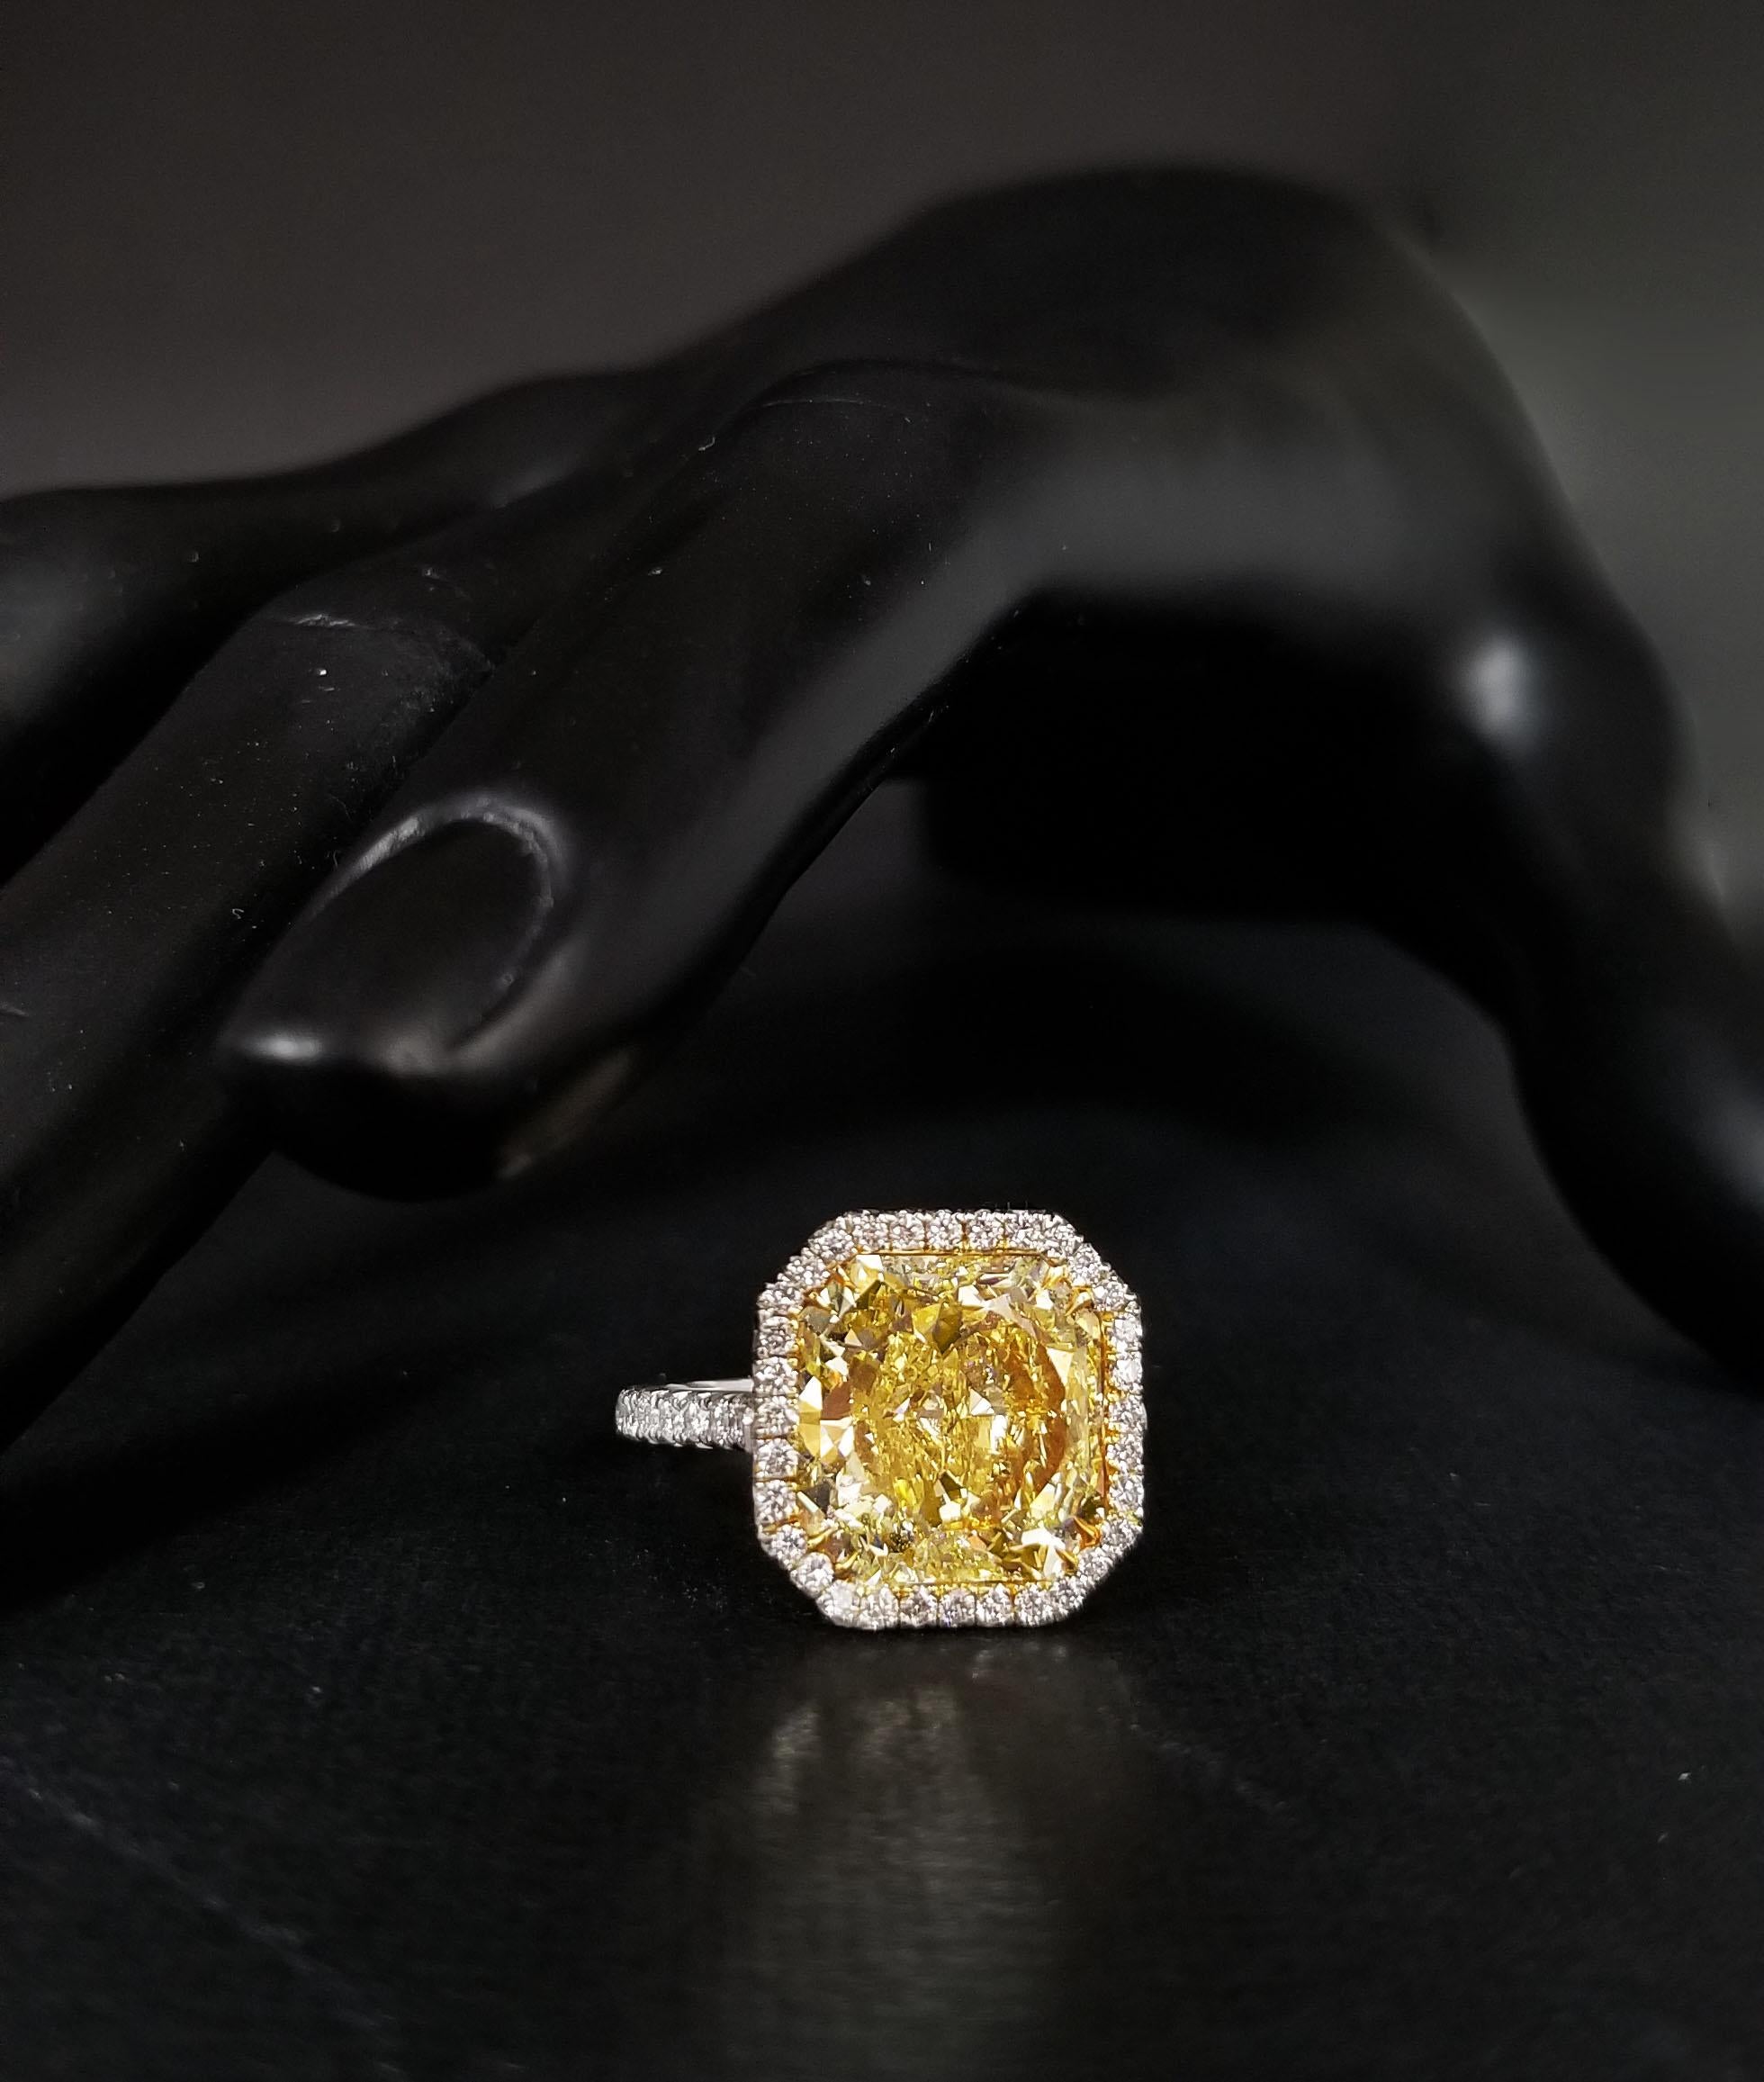 7 carat yellow diamond